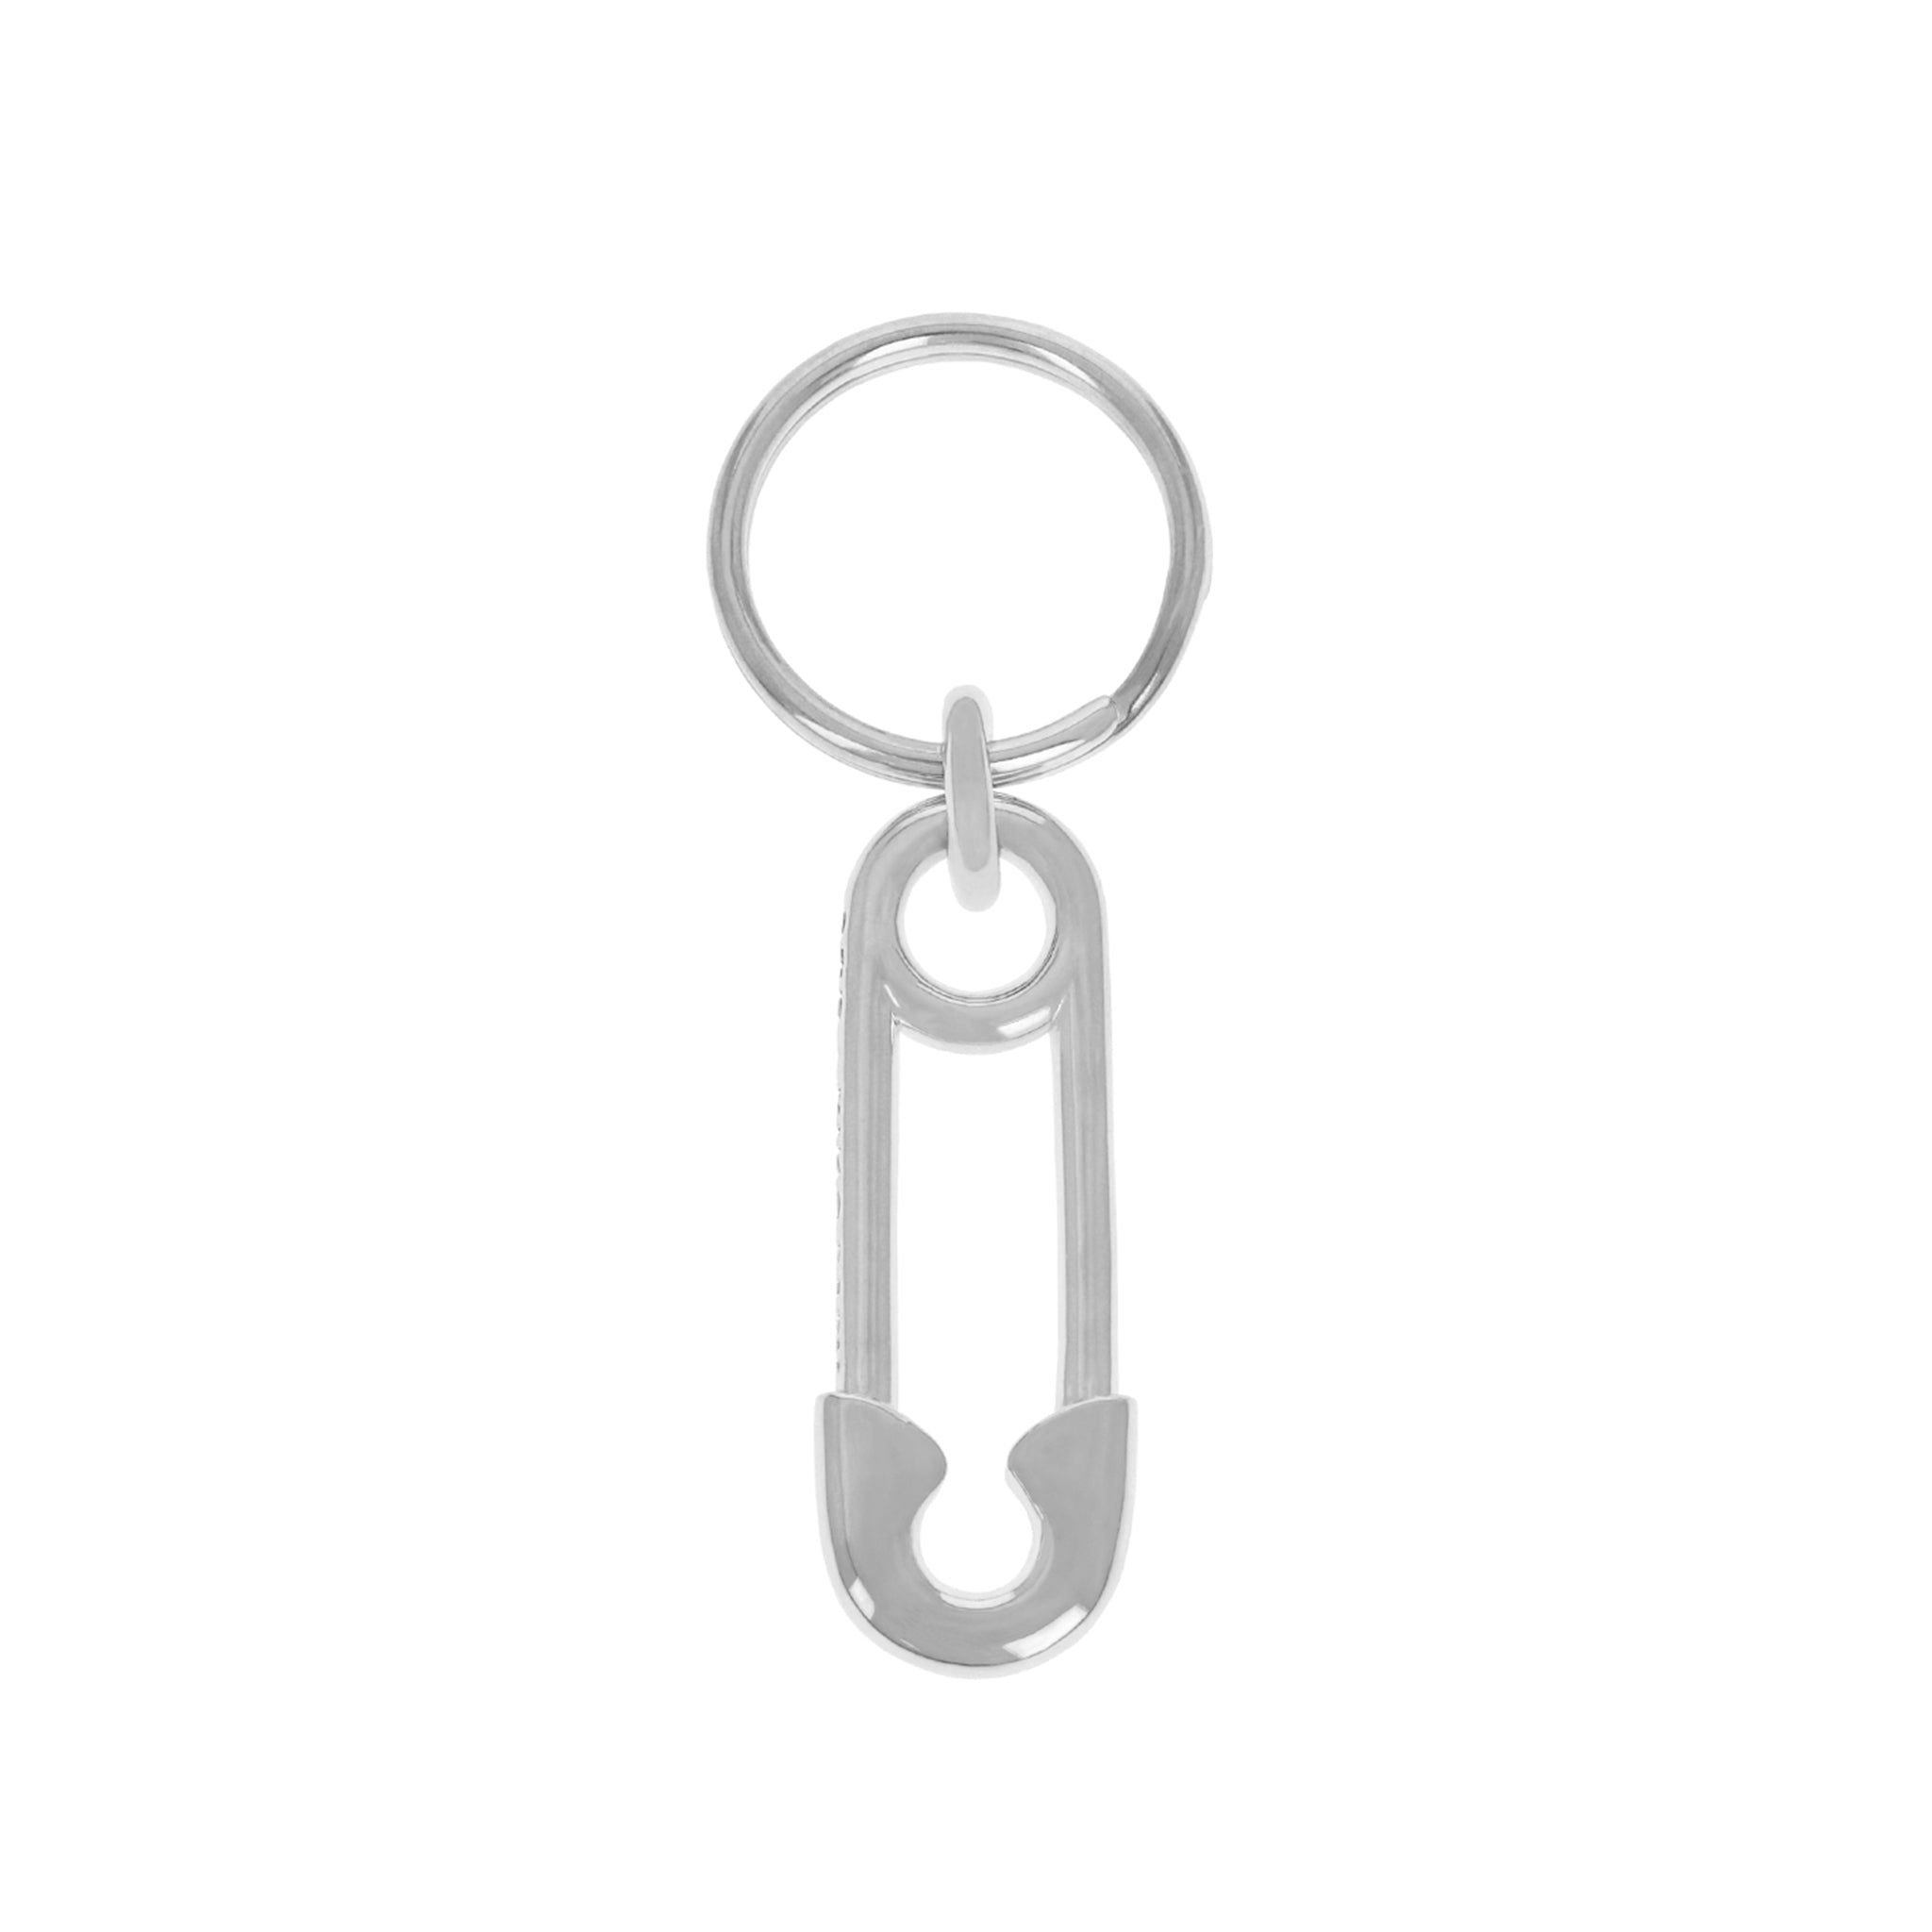 Safety Pin Key Fob